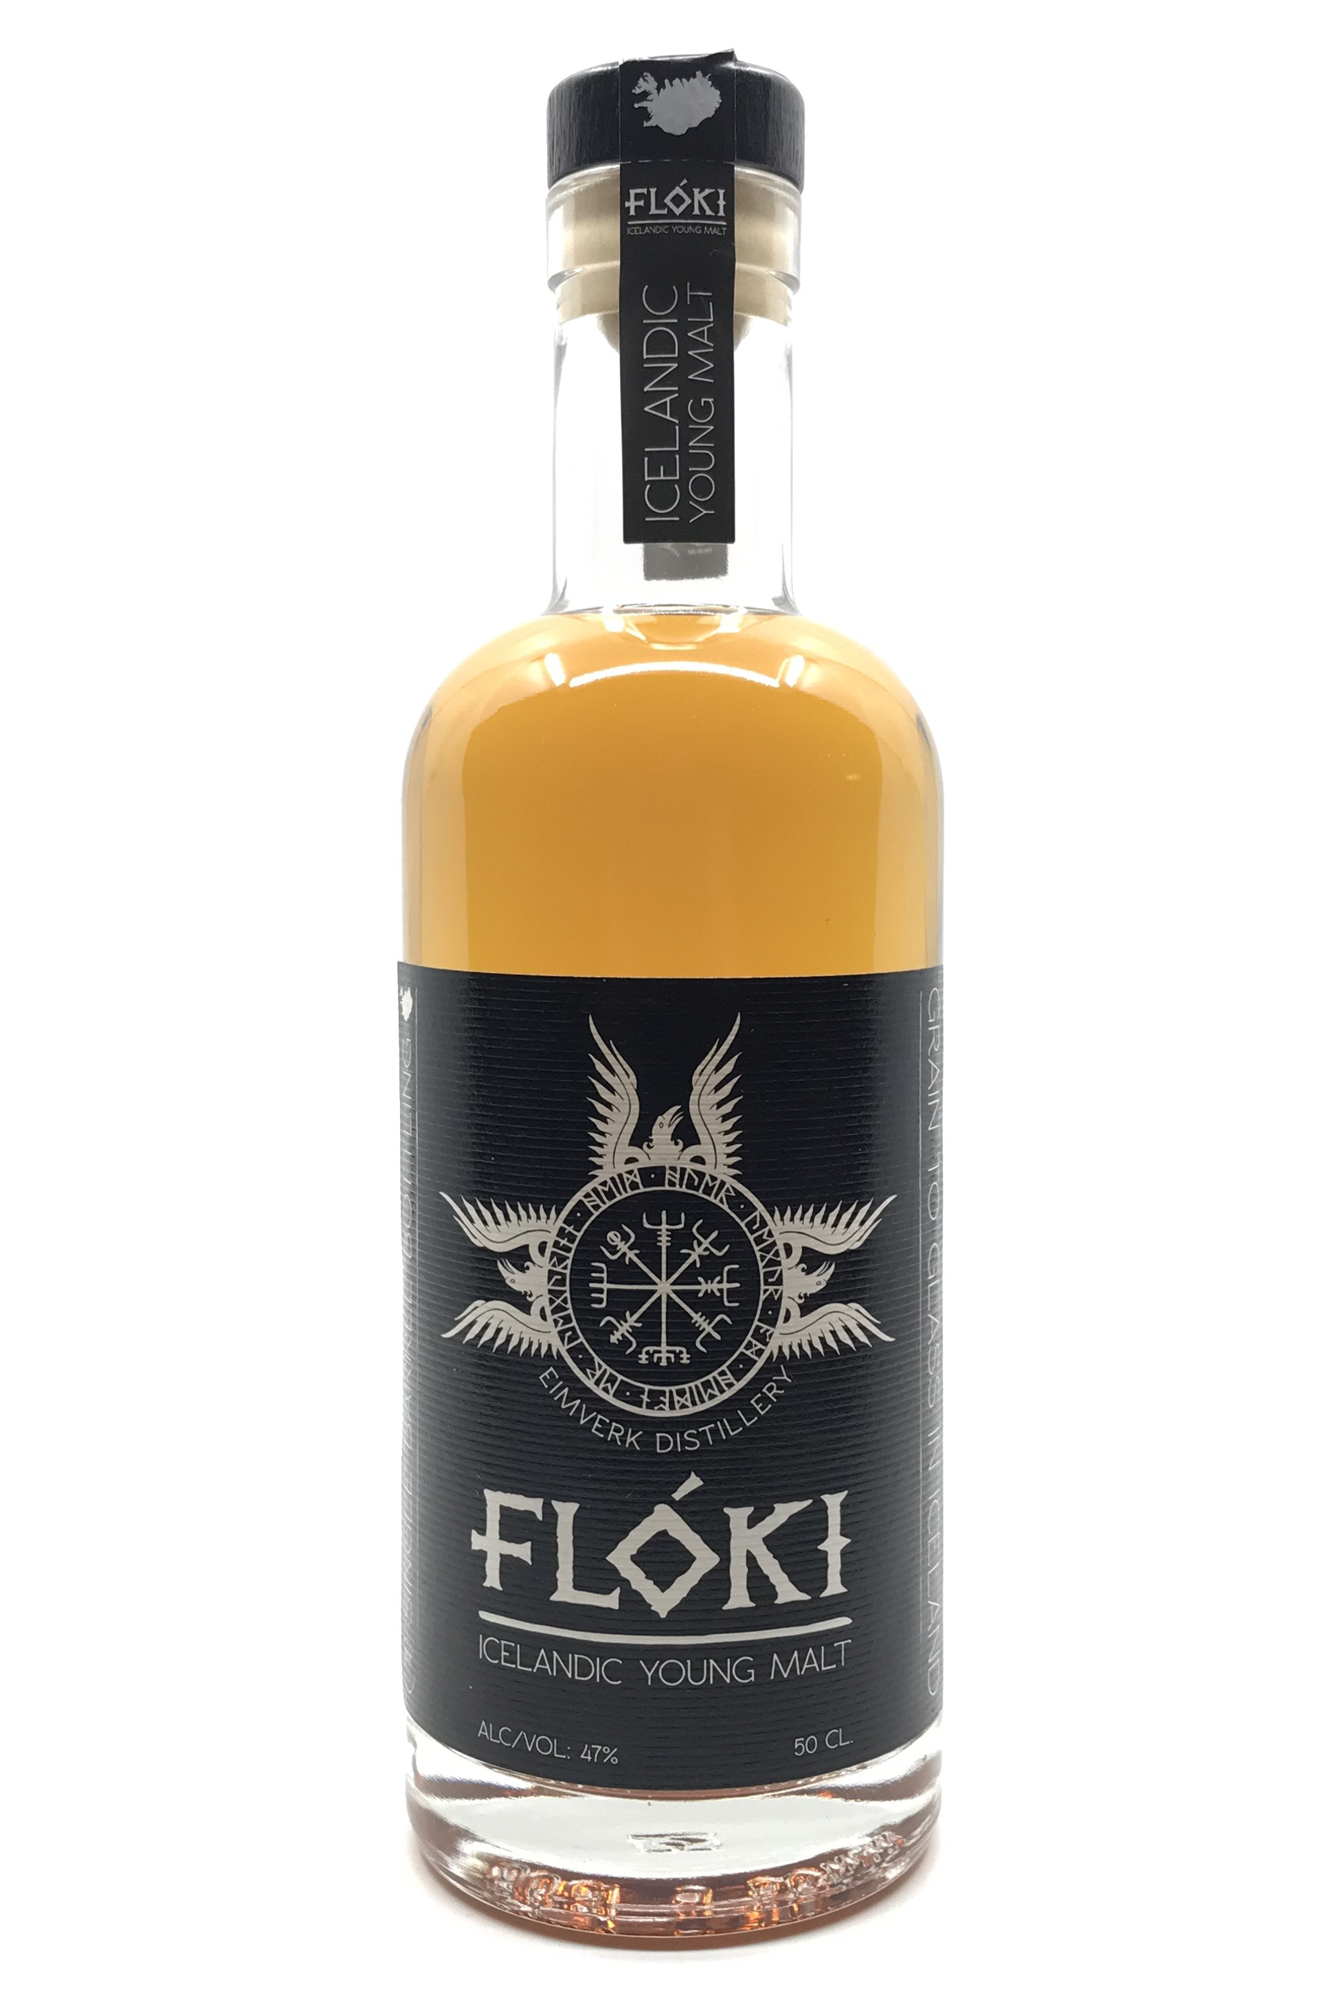 Floki Icelandic Young Malt Whisky - 47% vol. Alk. - 0,5l - Front